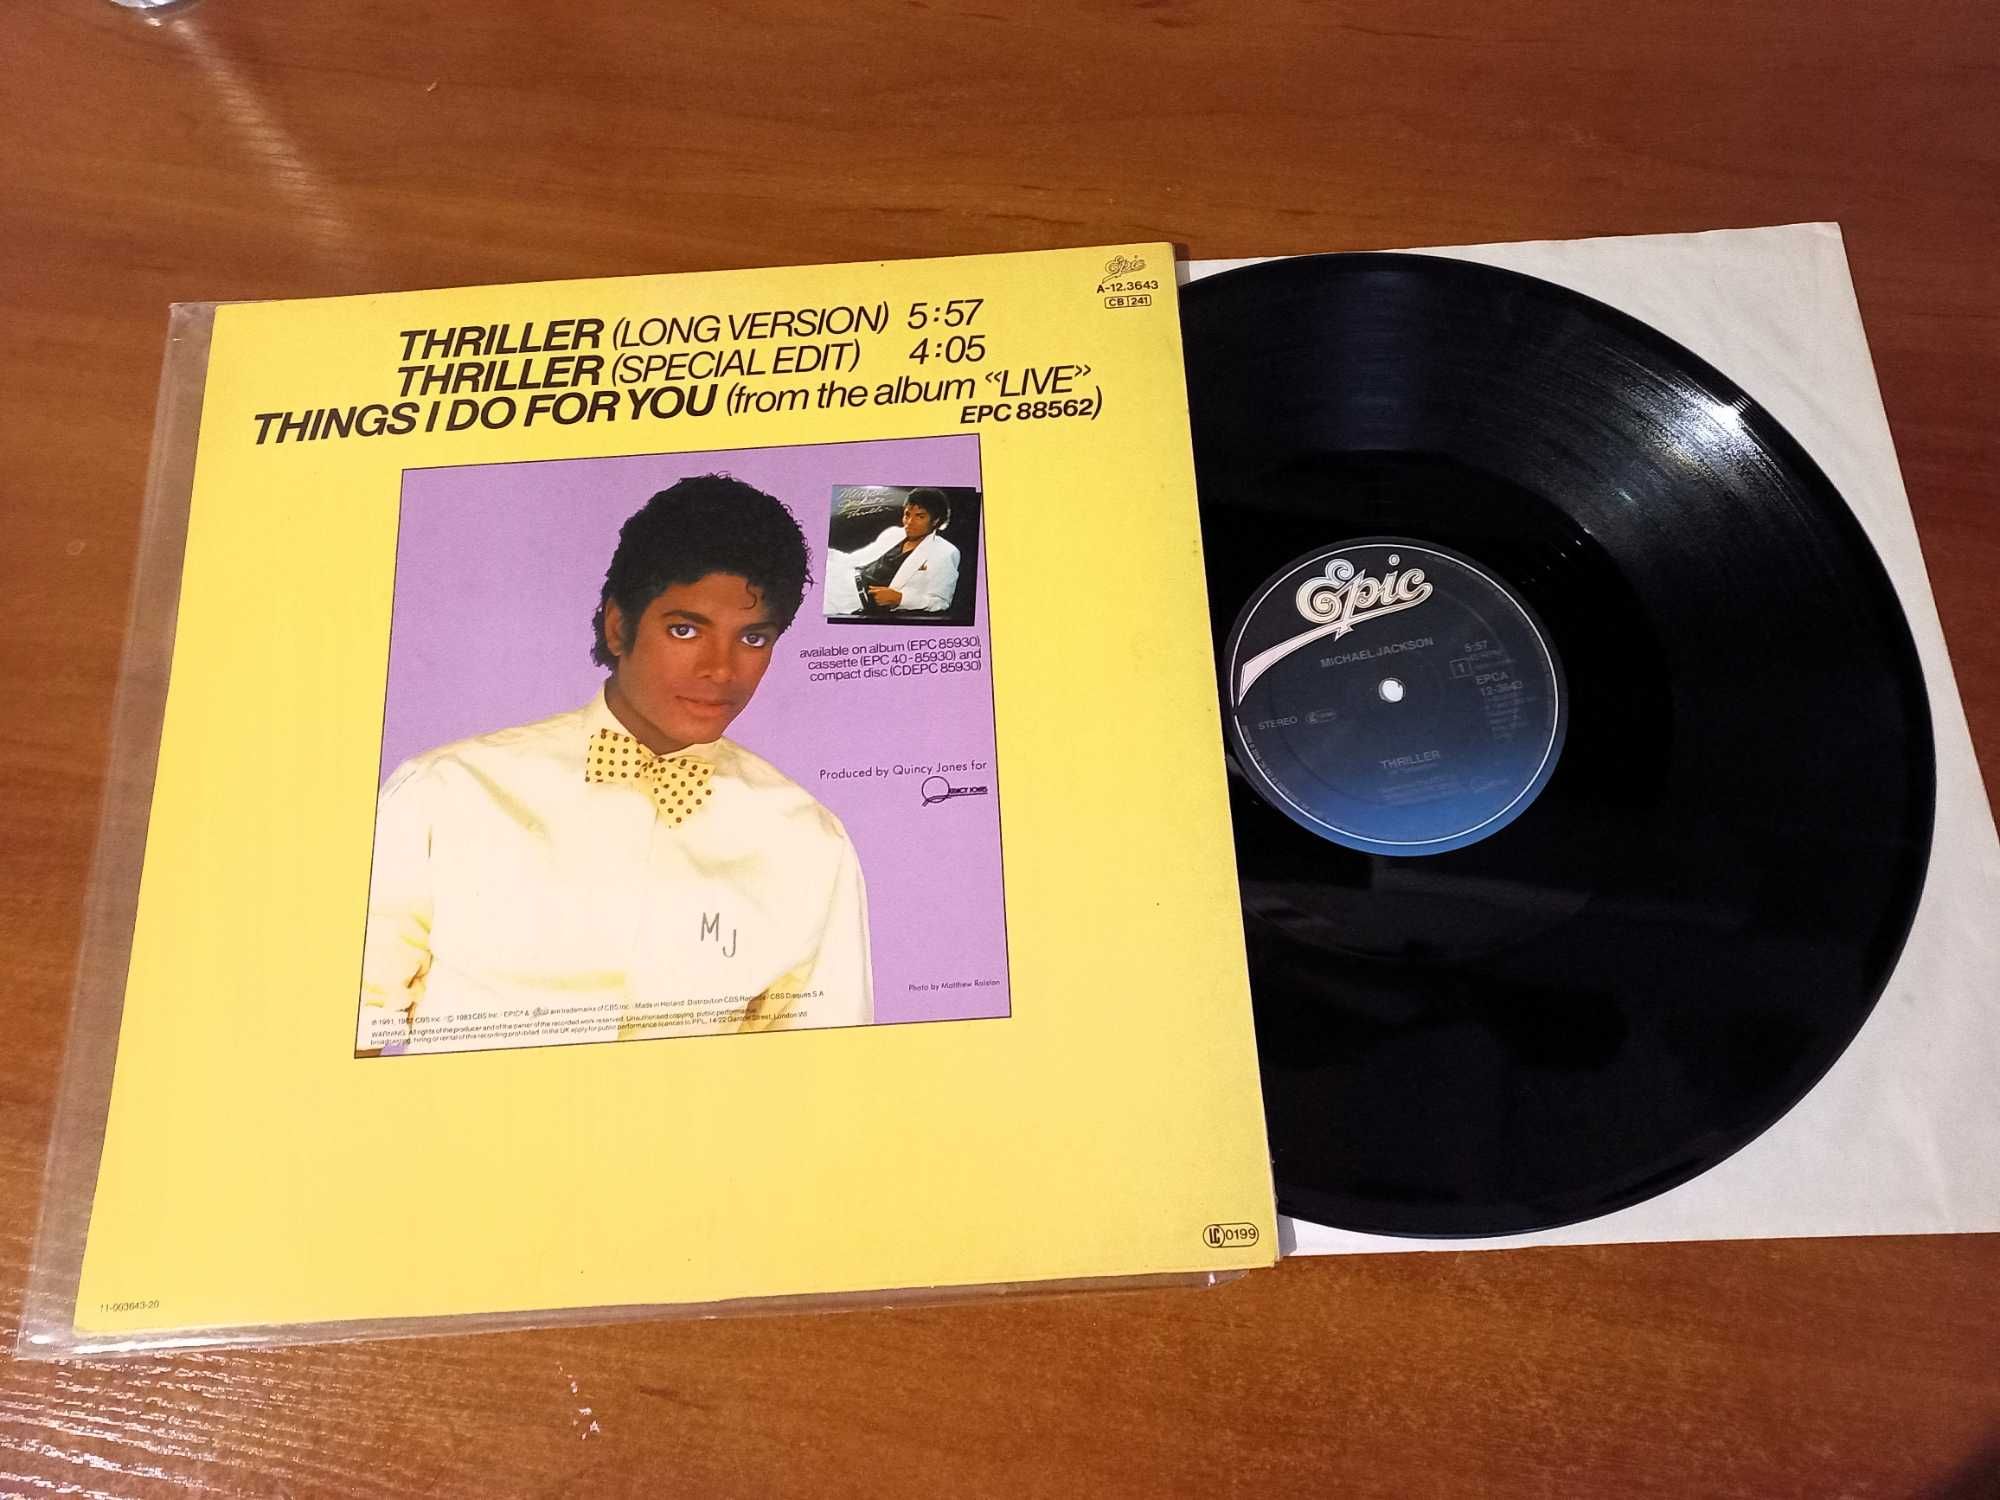 Michael Jackson – Thriller Vinyl, 12", 45 RPM, Maxi-Single, Stereo